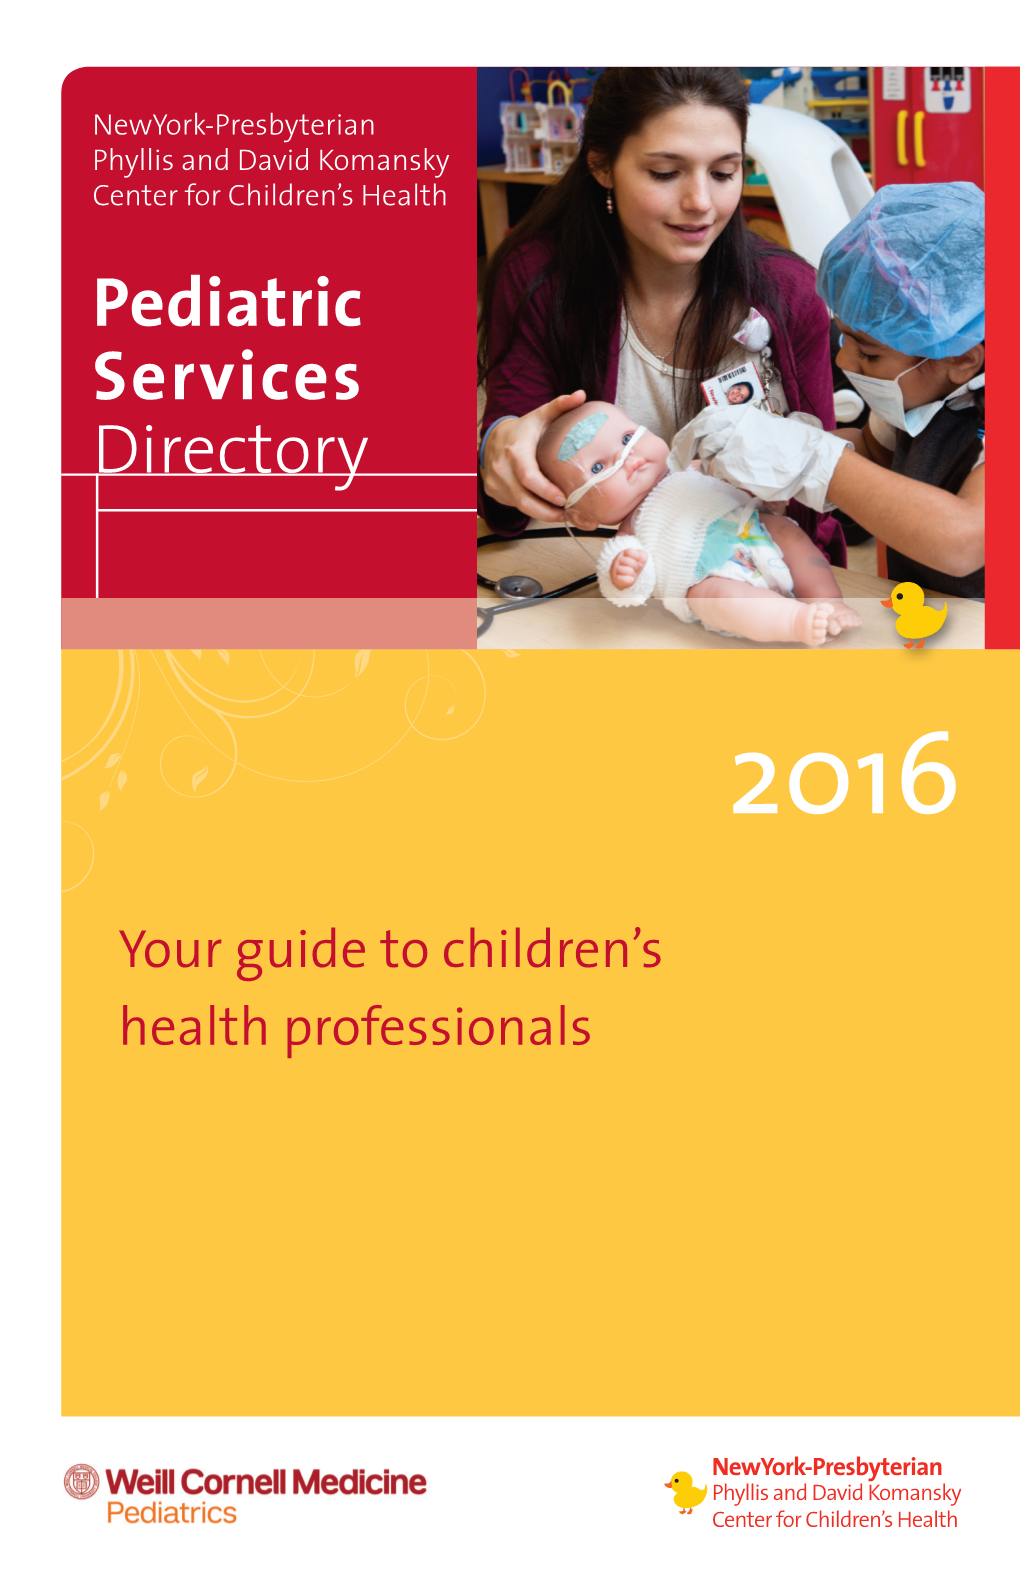 Pediatric Physician Directory